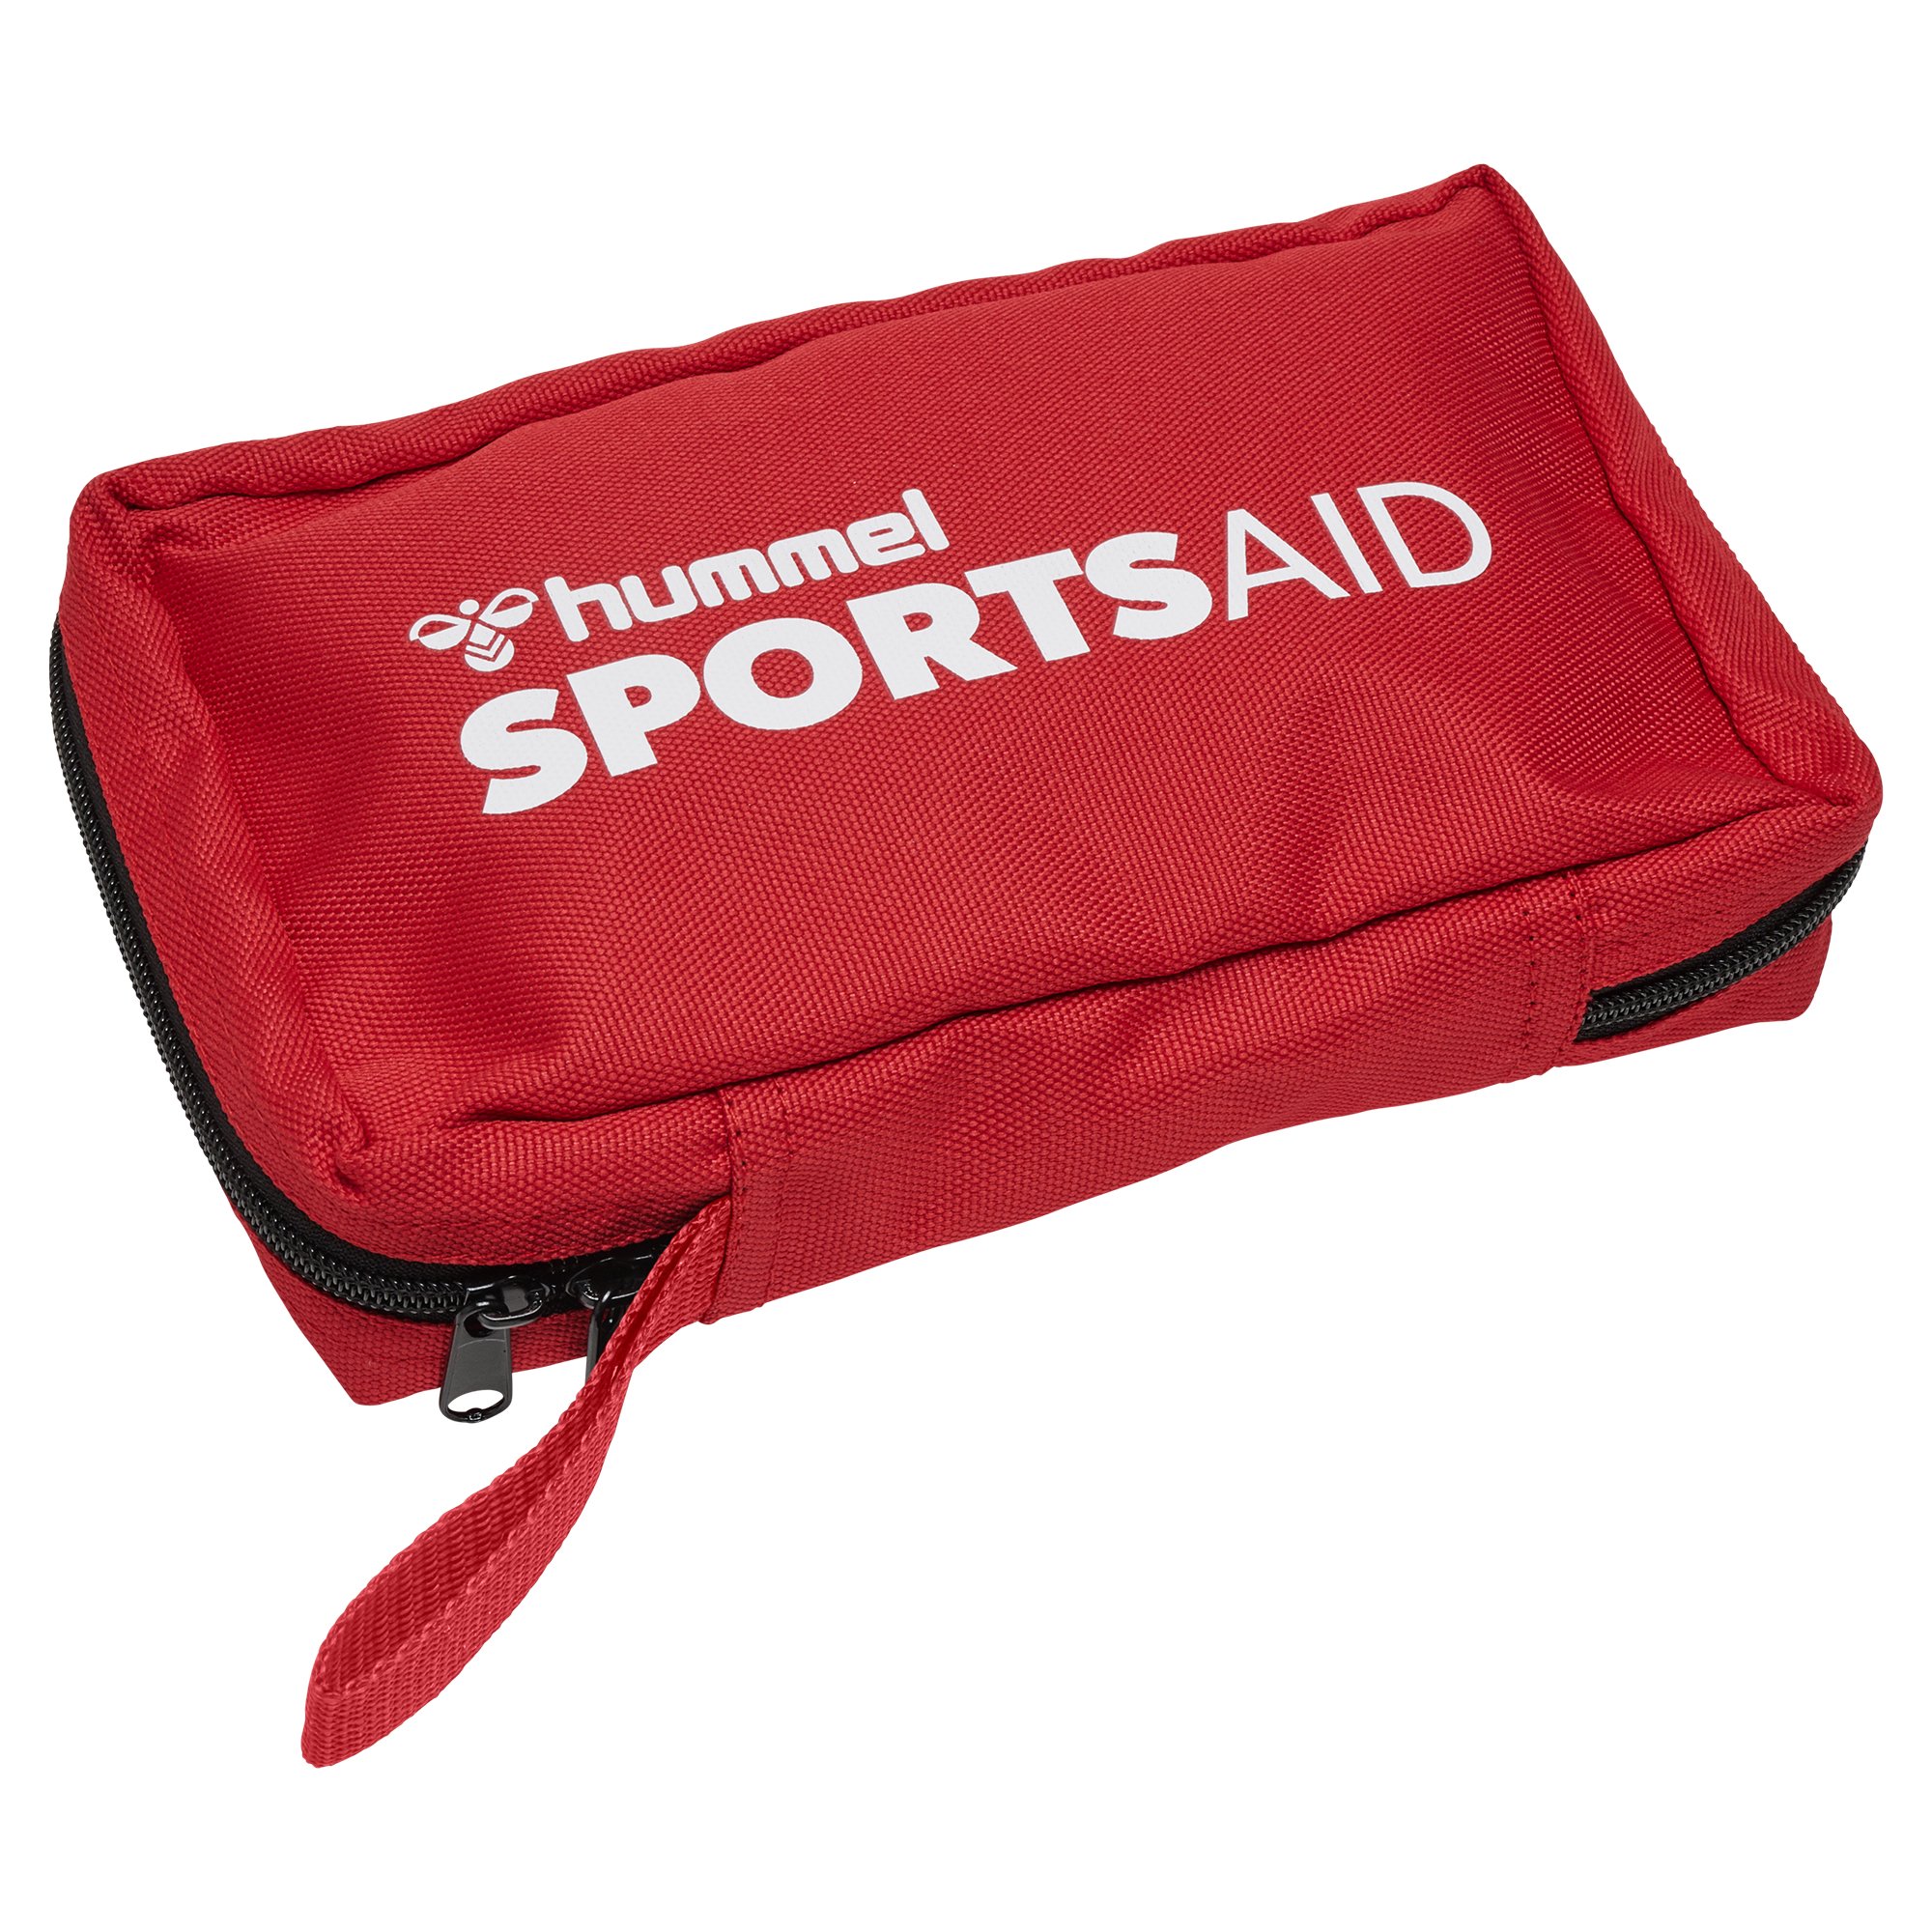 Sportsaid First Aid Bag S